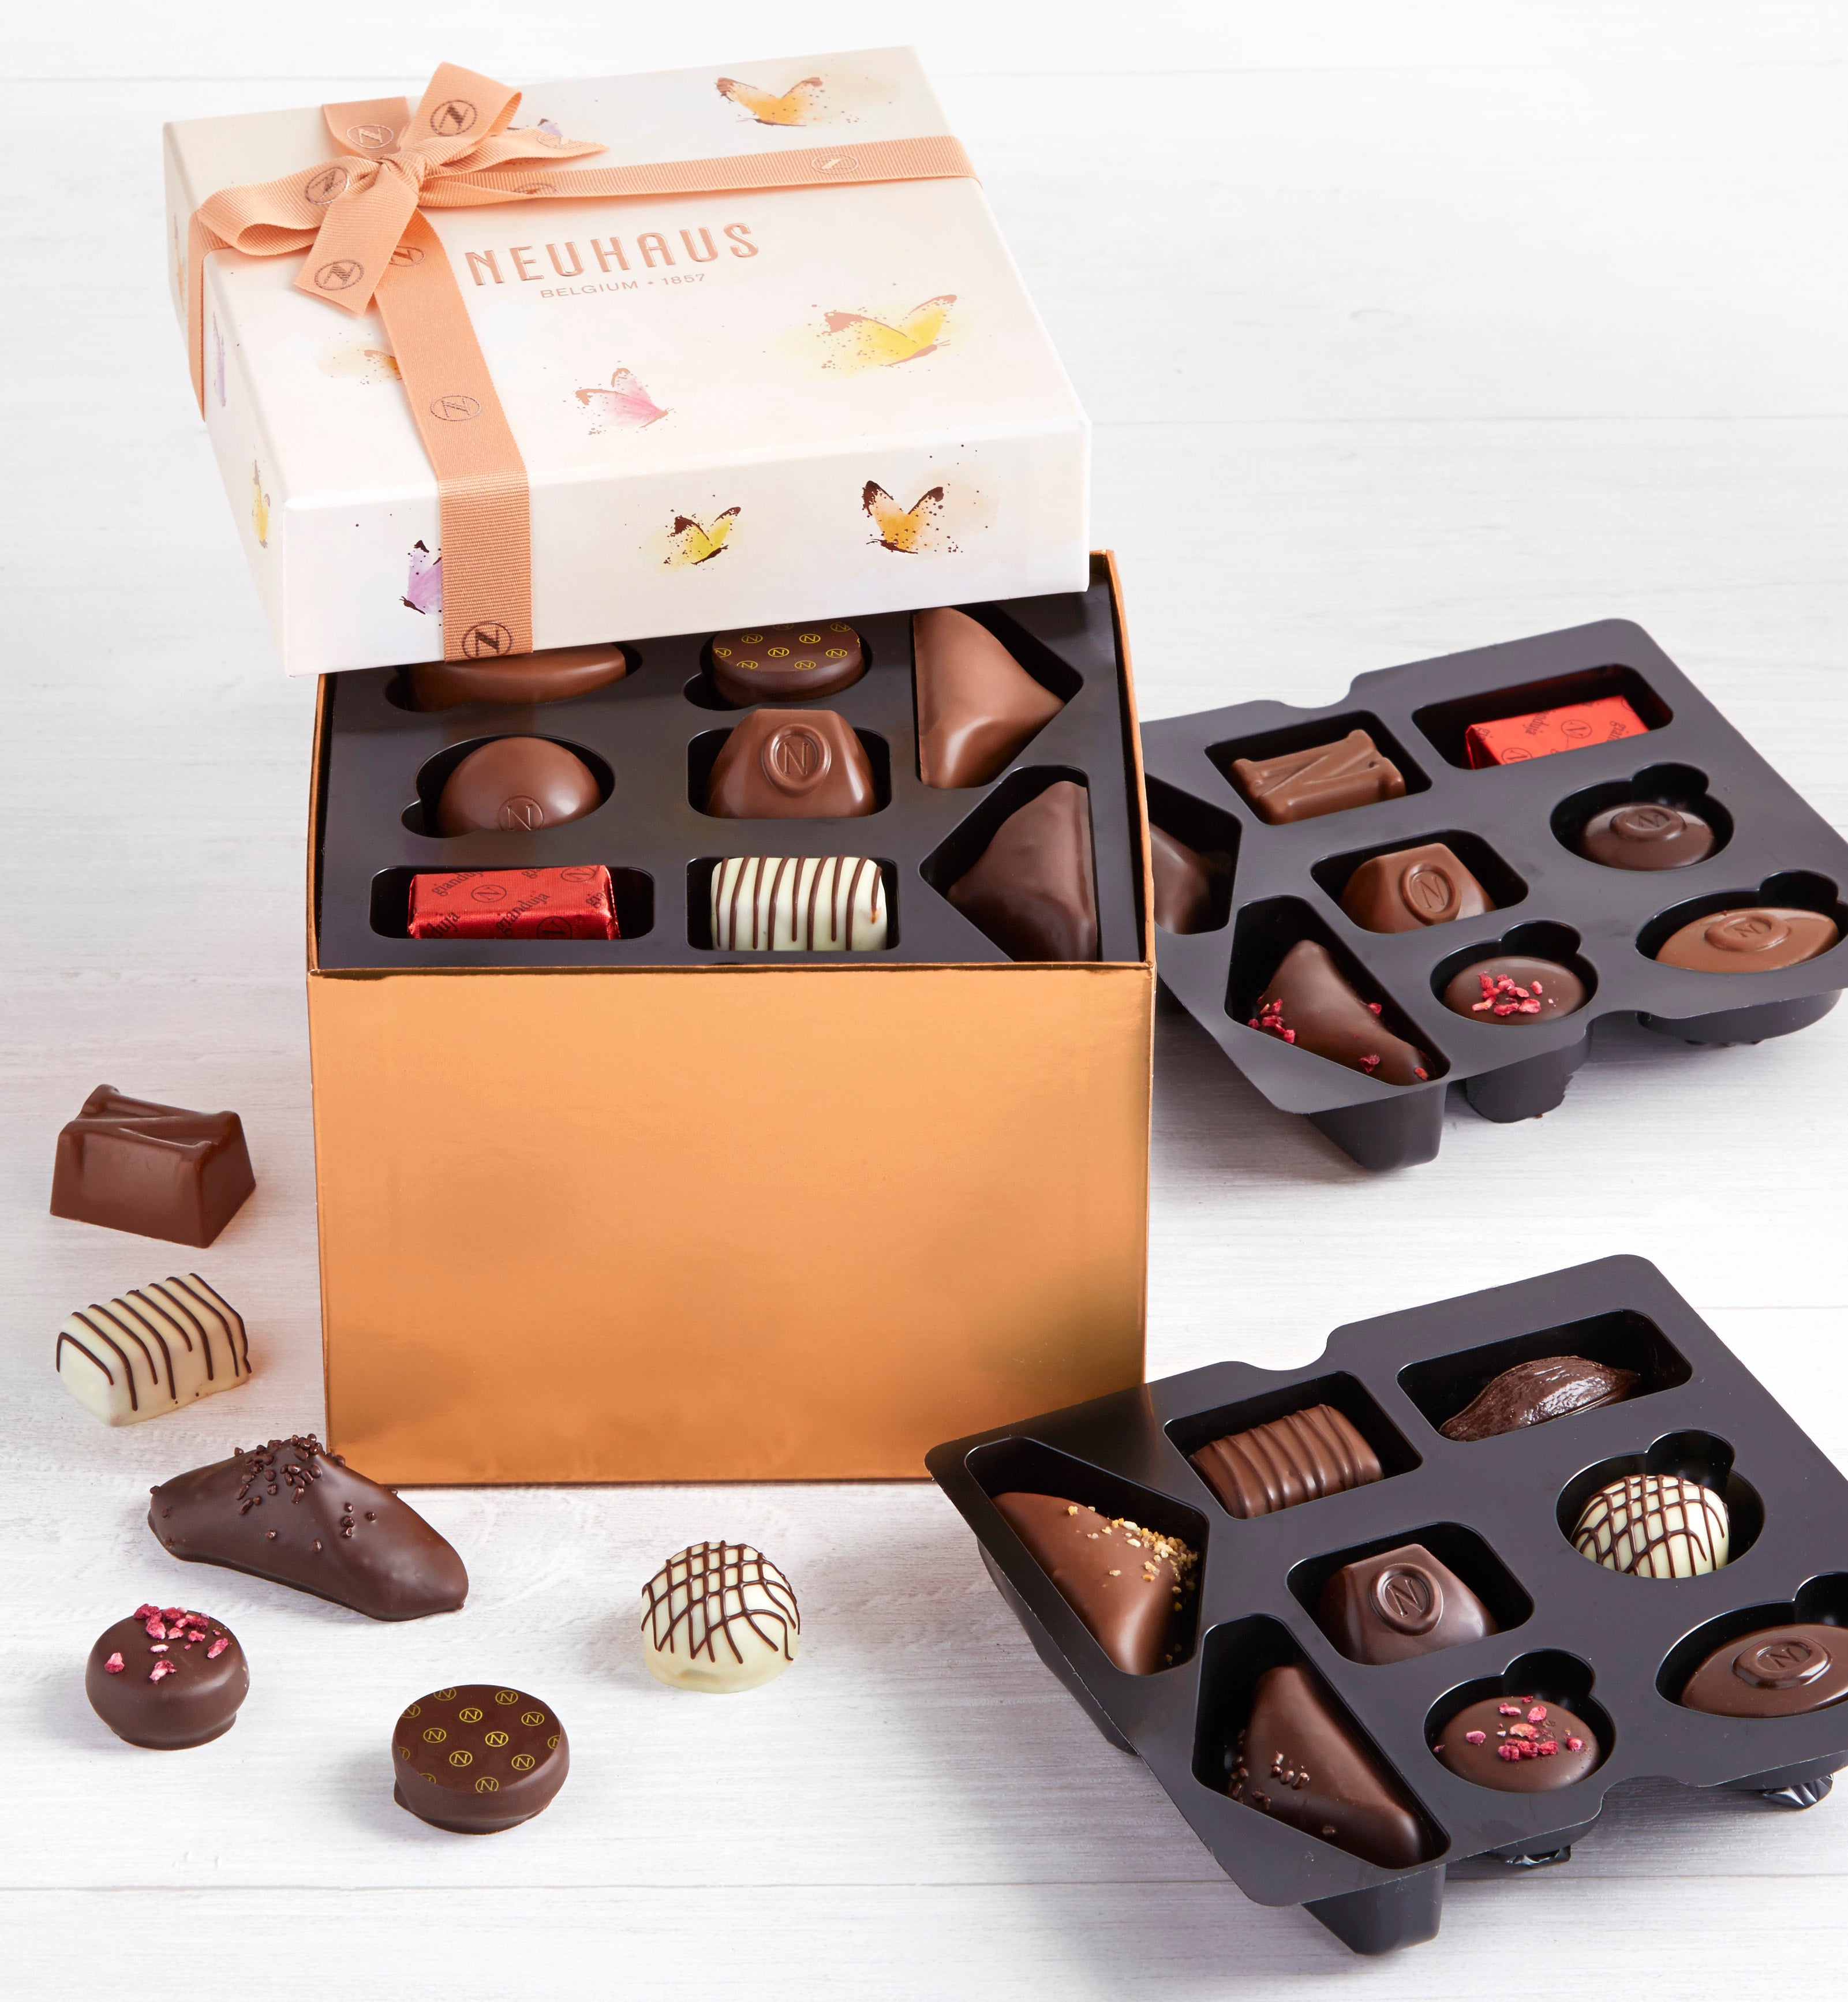 Neuhaus Chocolates Spring Gift Box 24pc